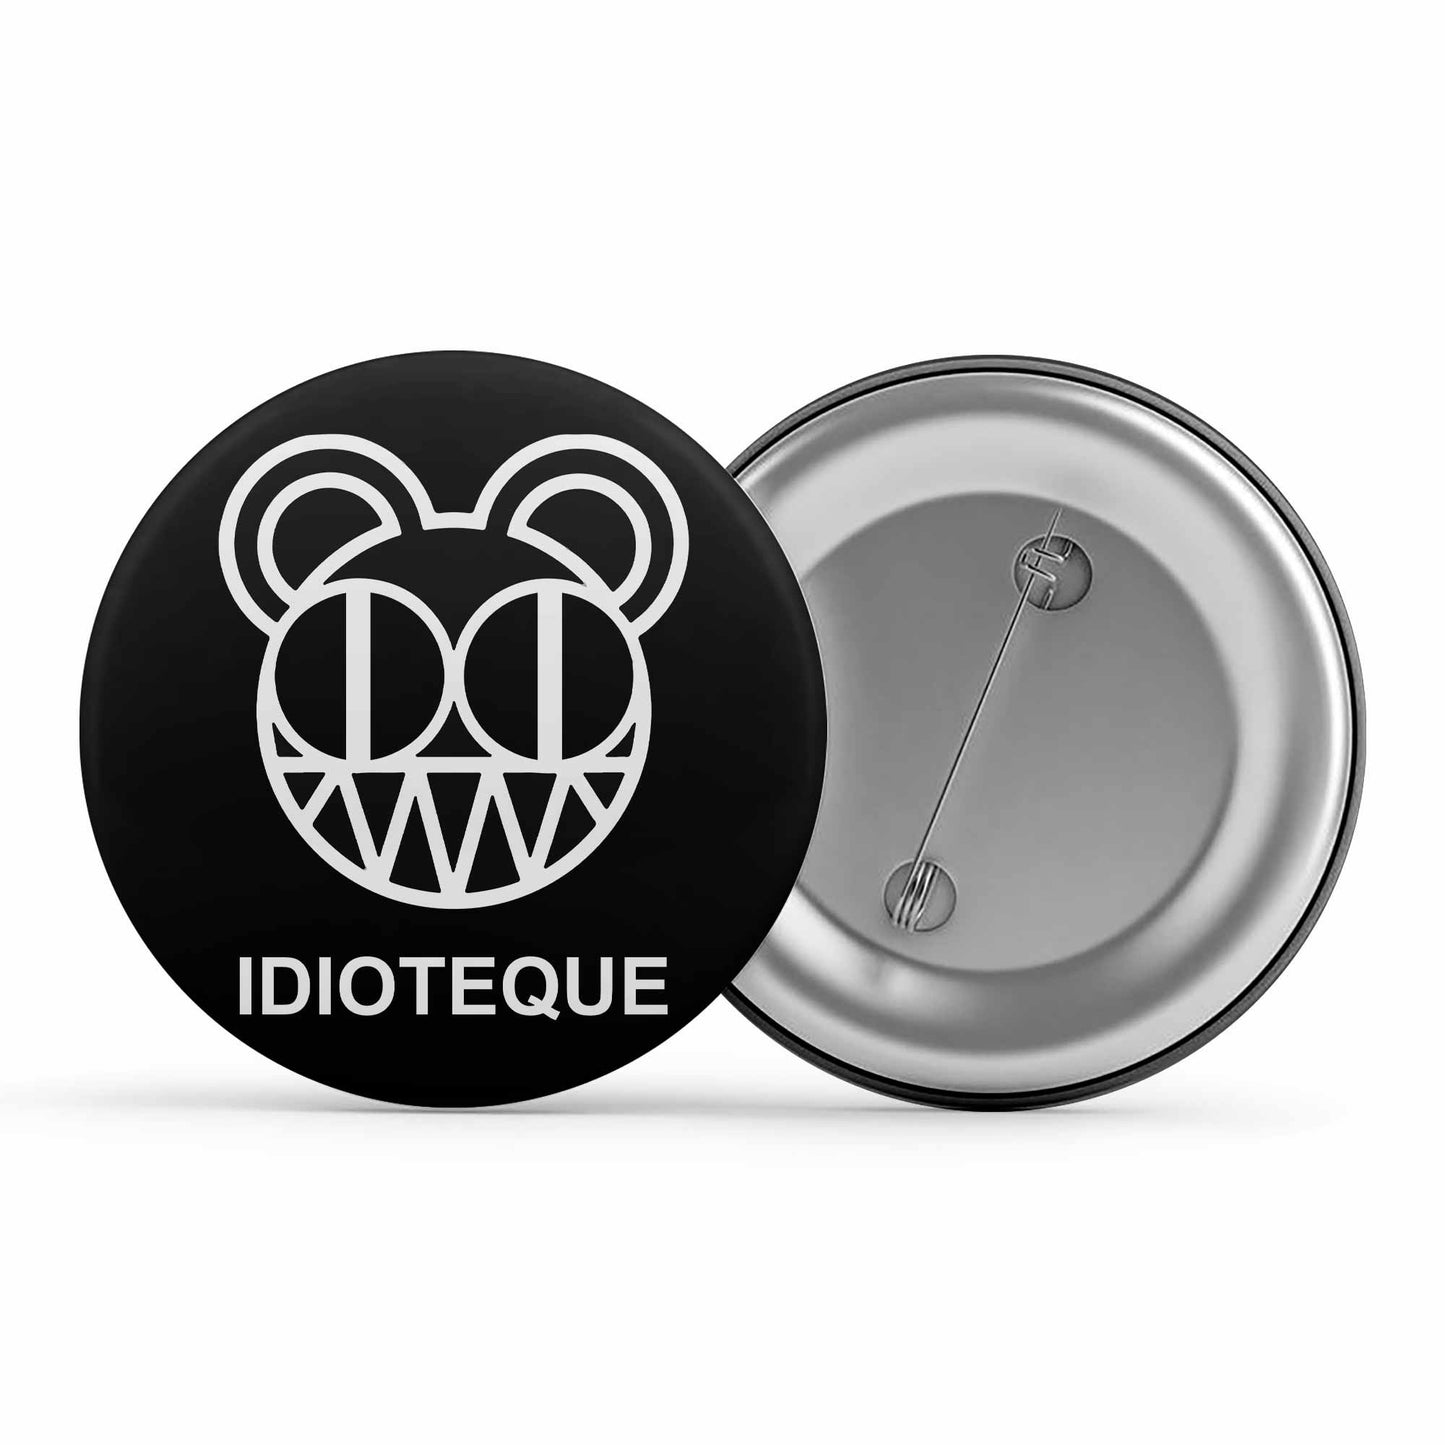 radiohead idioteque badge pin button music band buy online india the banyan tee tbt men women girls boys unisex